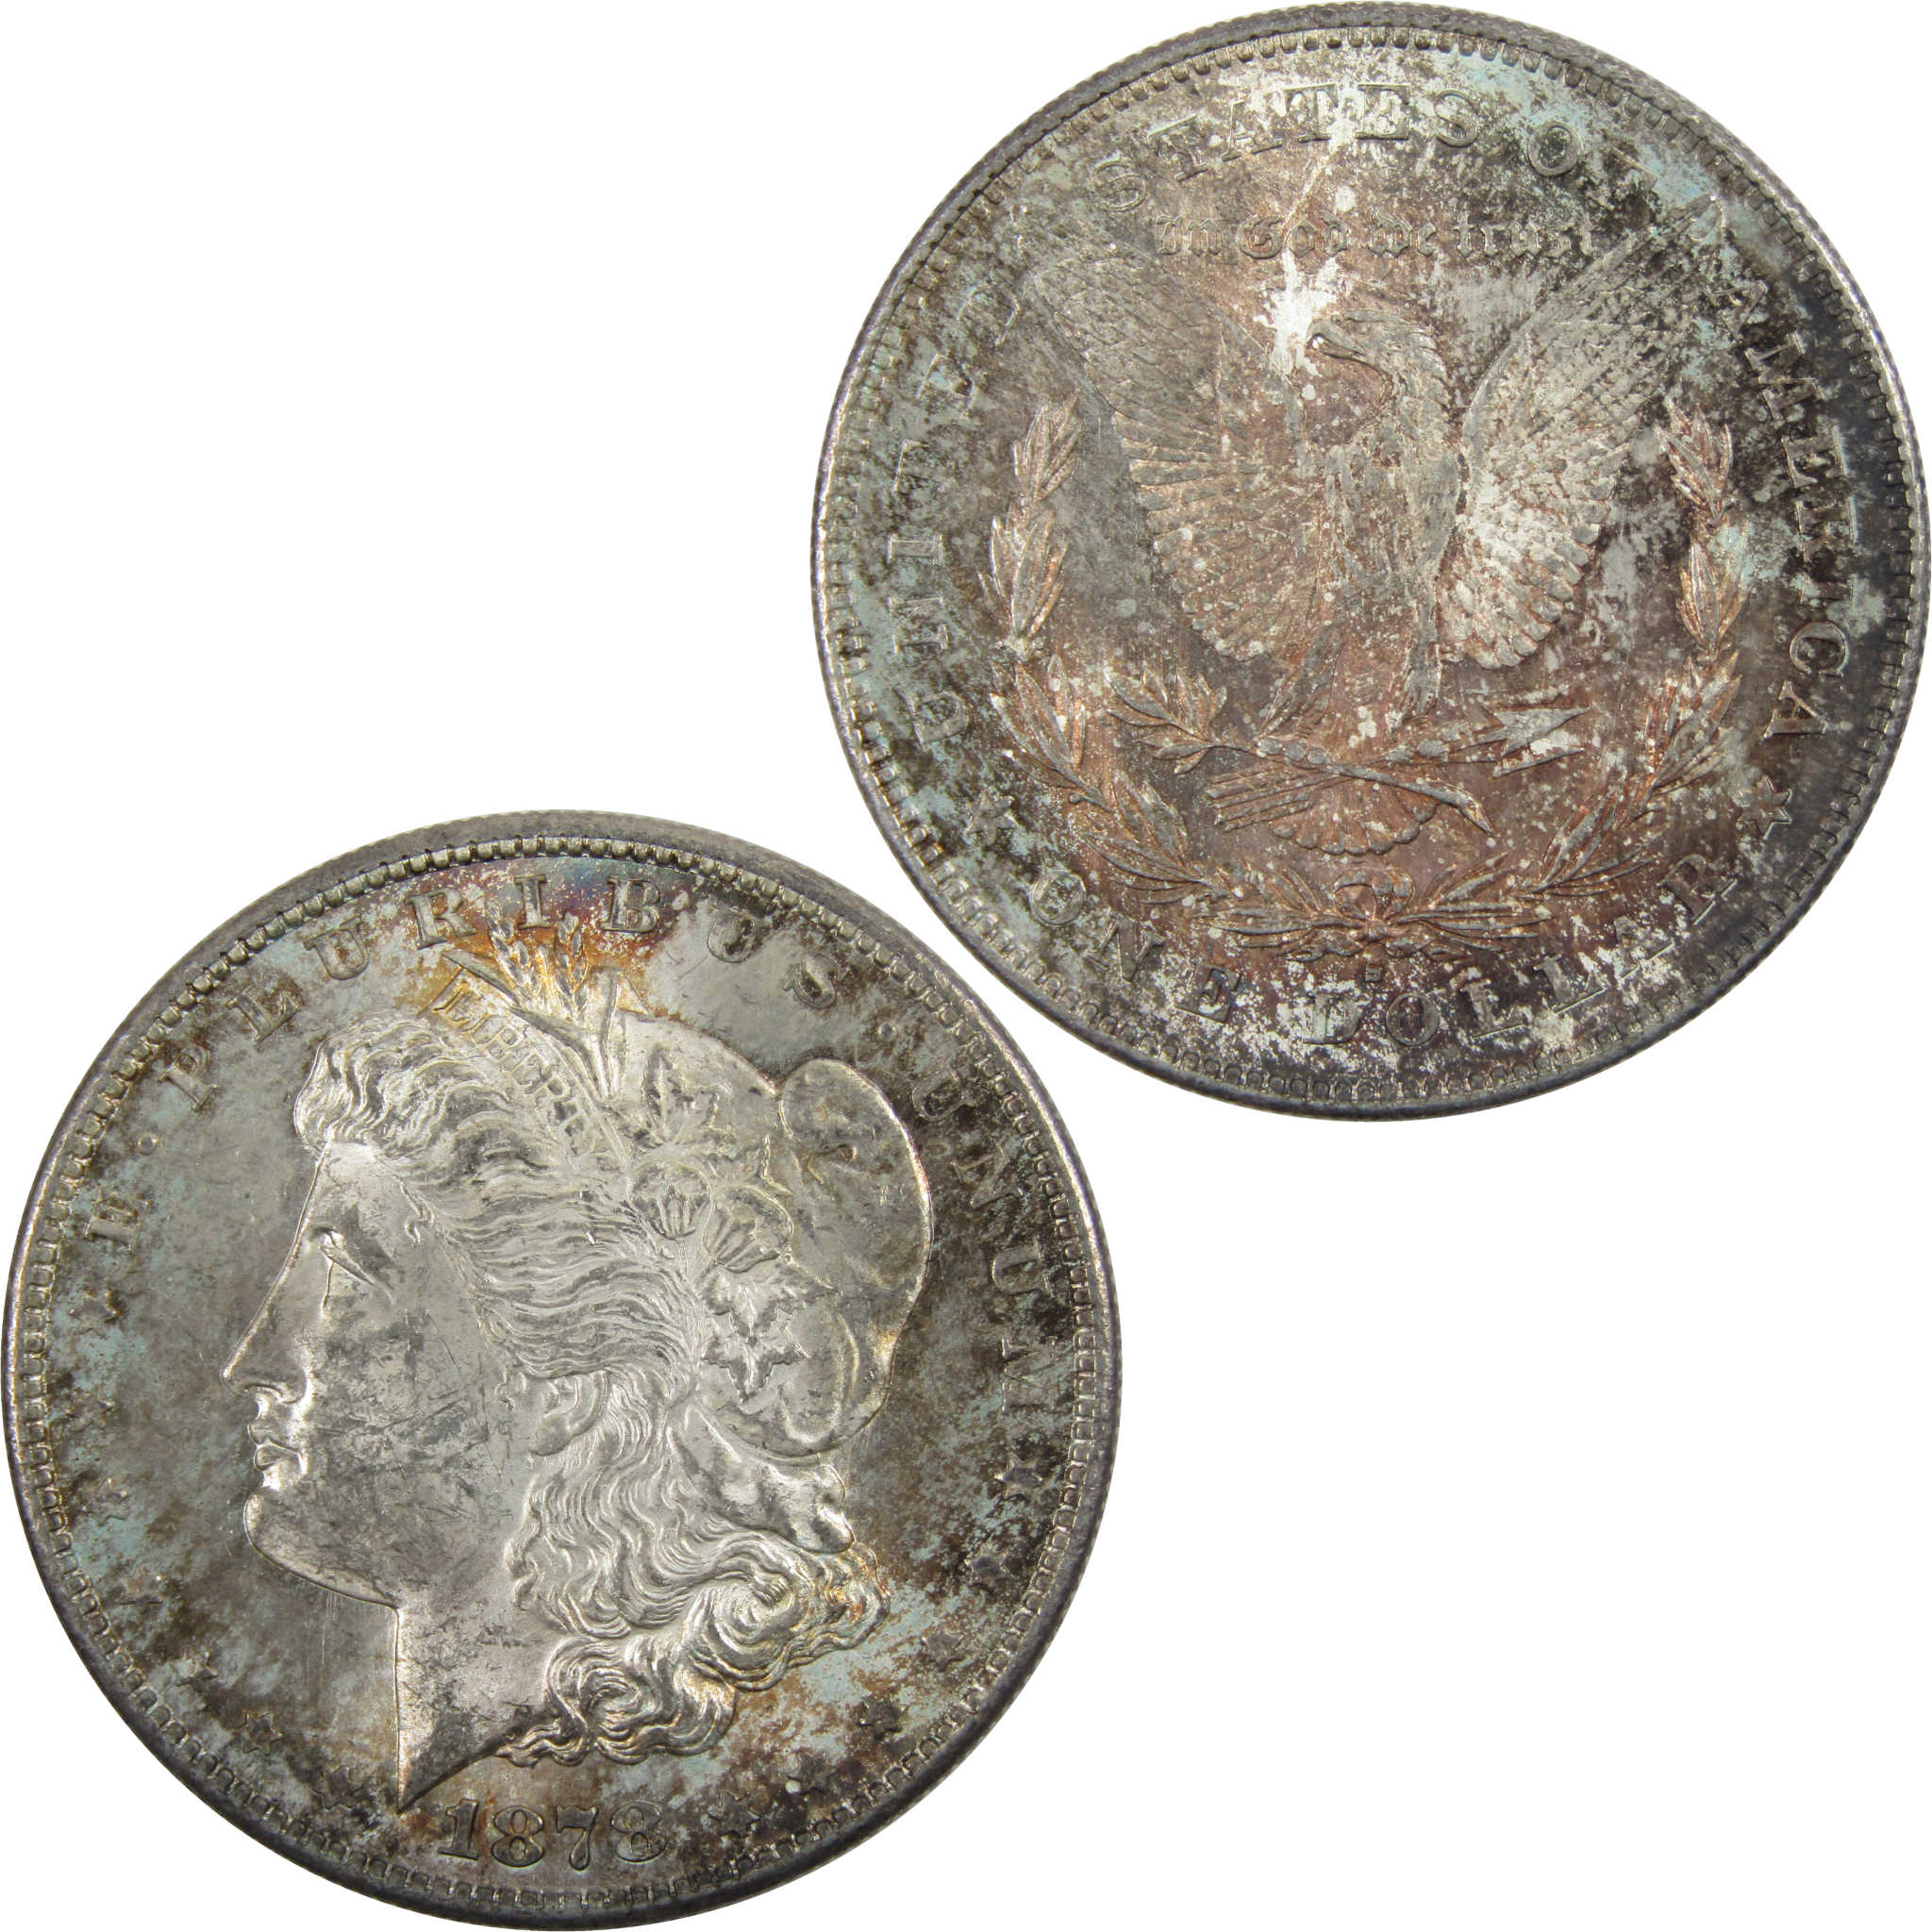 1878 S Morgan Dollar BU Uncirculated 90% Silver $1 Coin SKU:I6050 - Morgan coin - Morgan silver dollar - Morgan silver dollar for sale - Profile Coins &amp; Collectibles